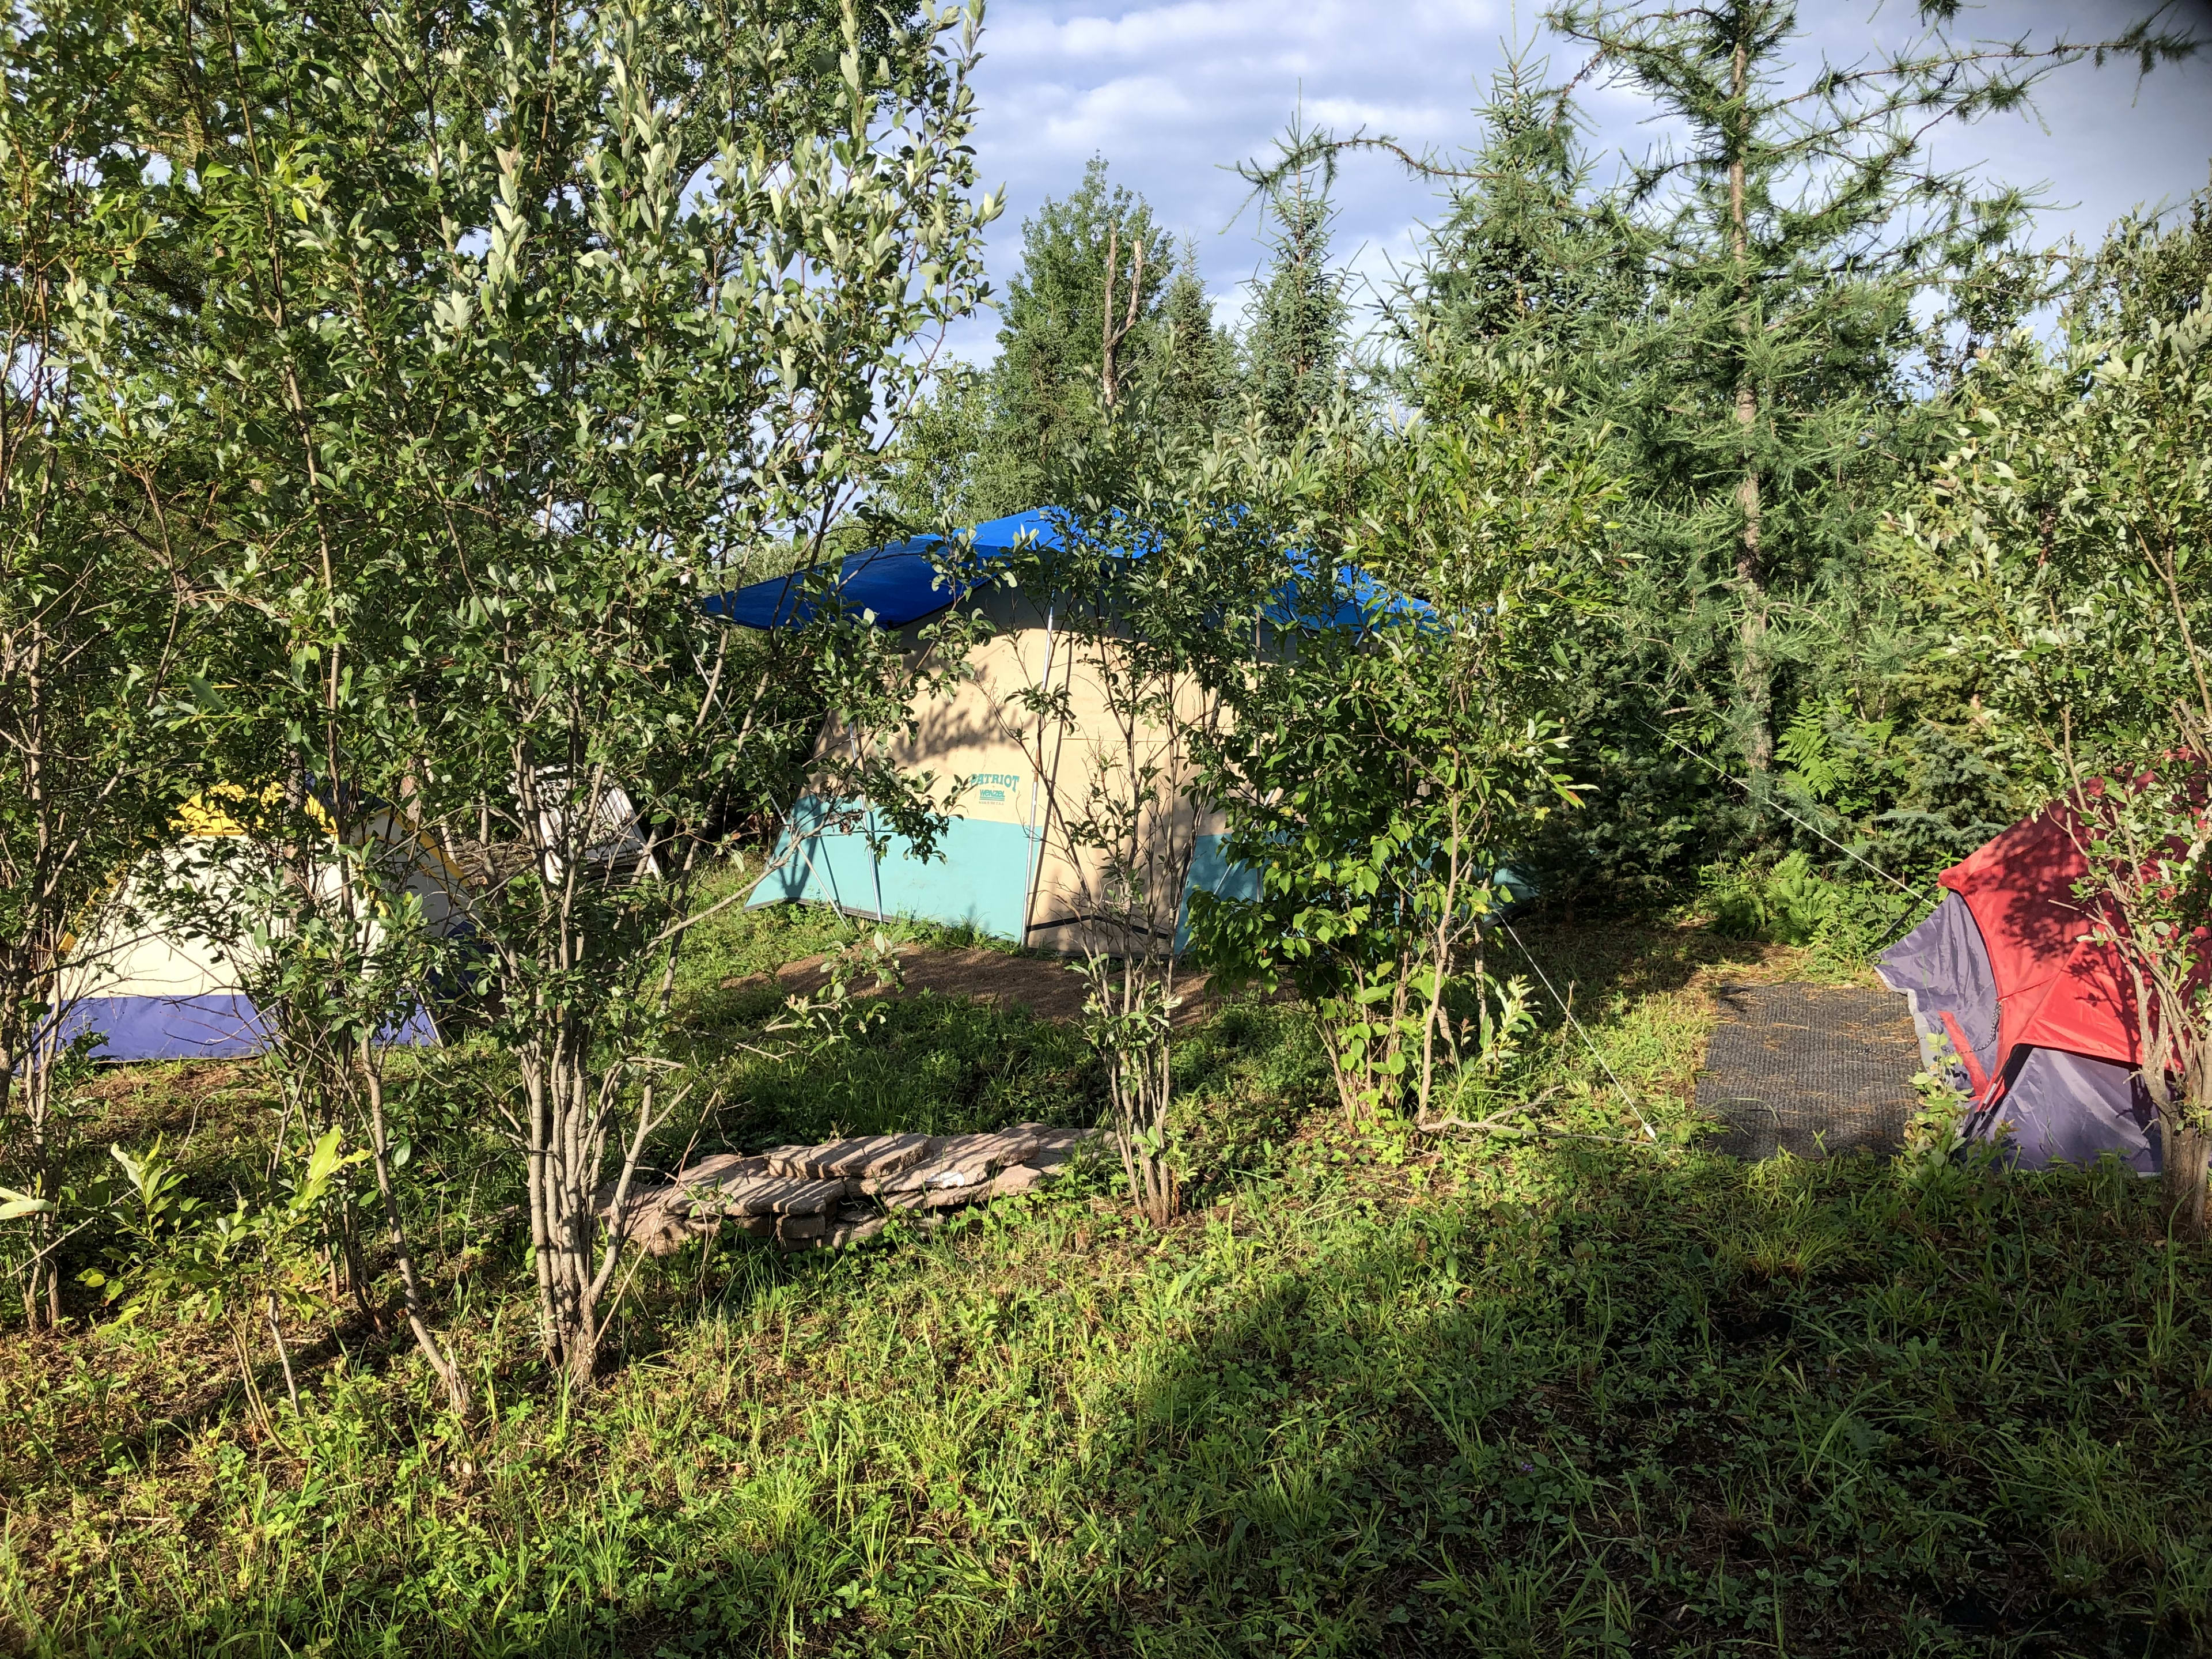 Primitive campsite amongst the trees